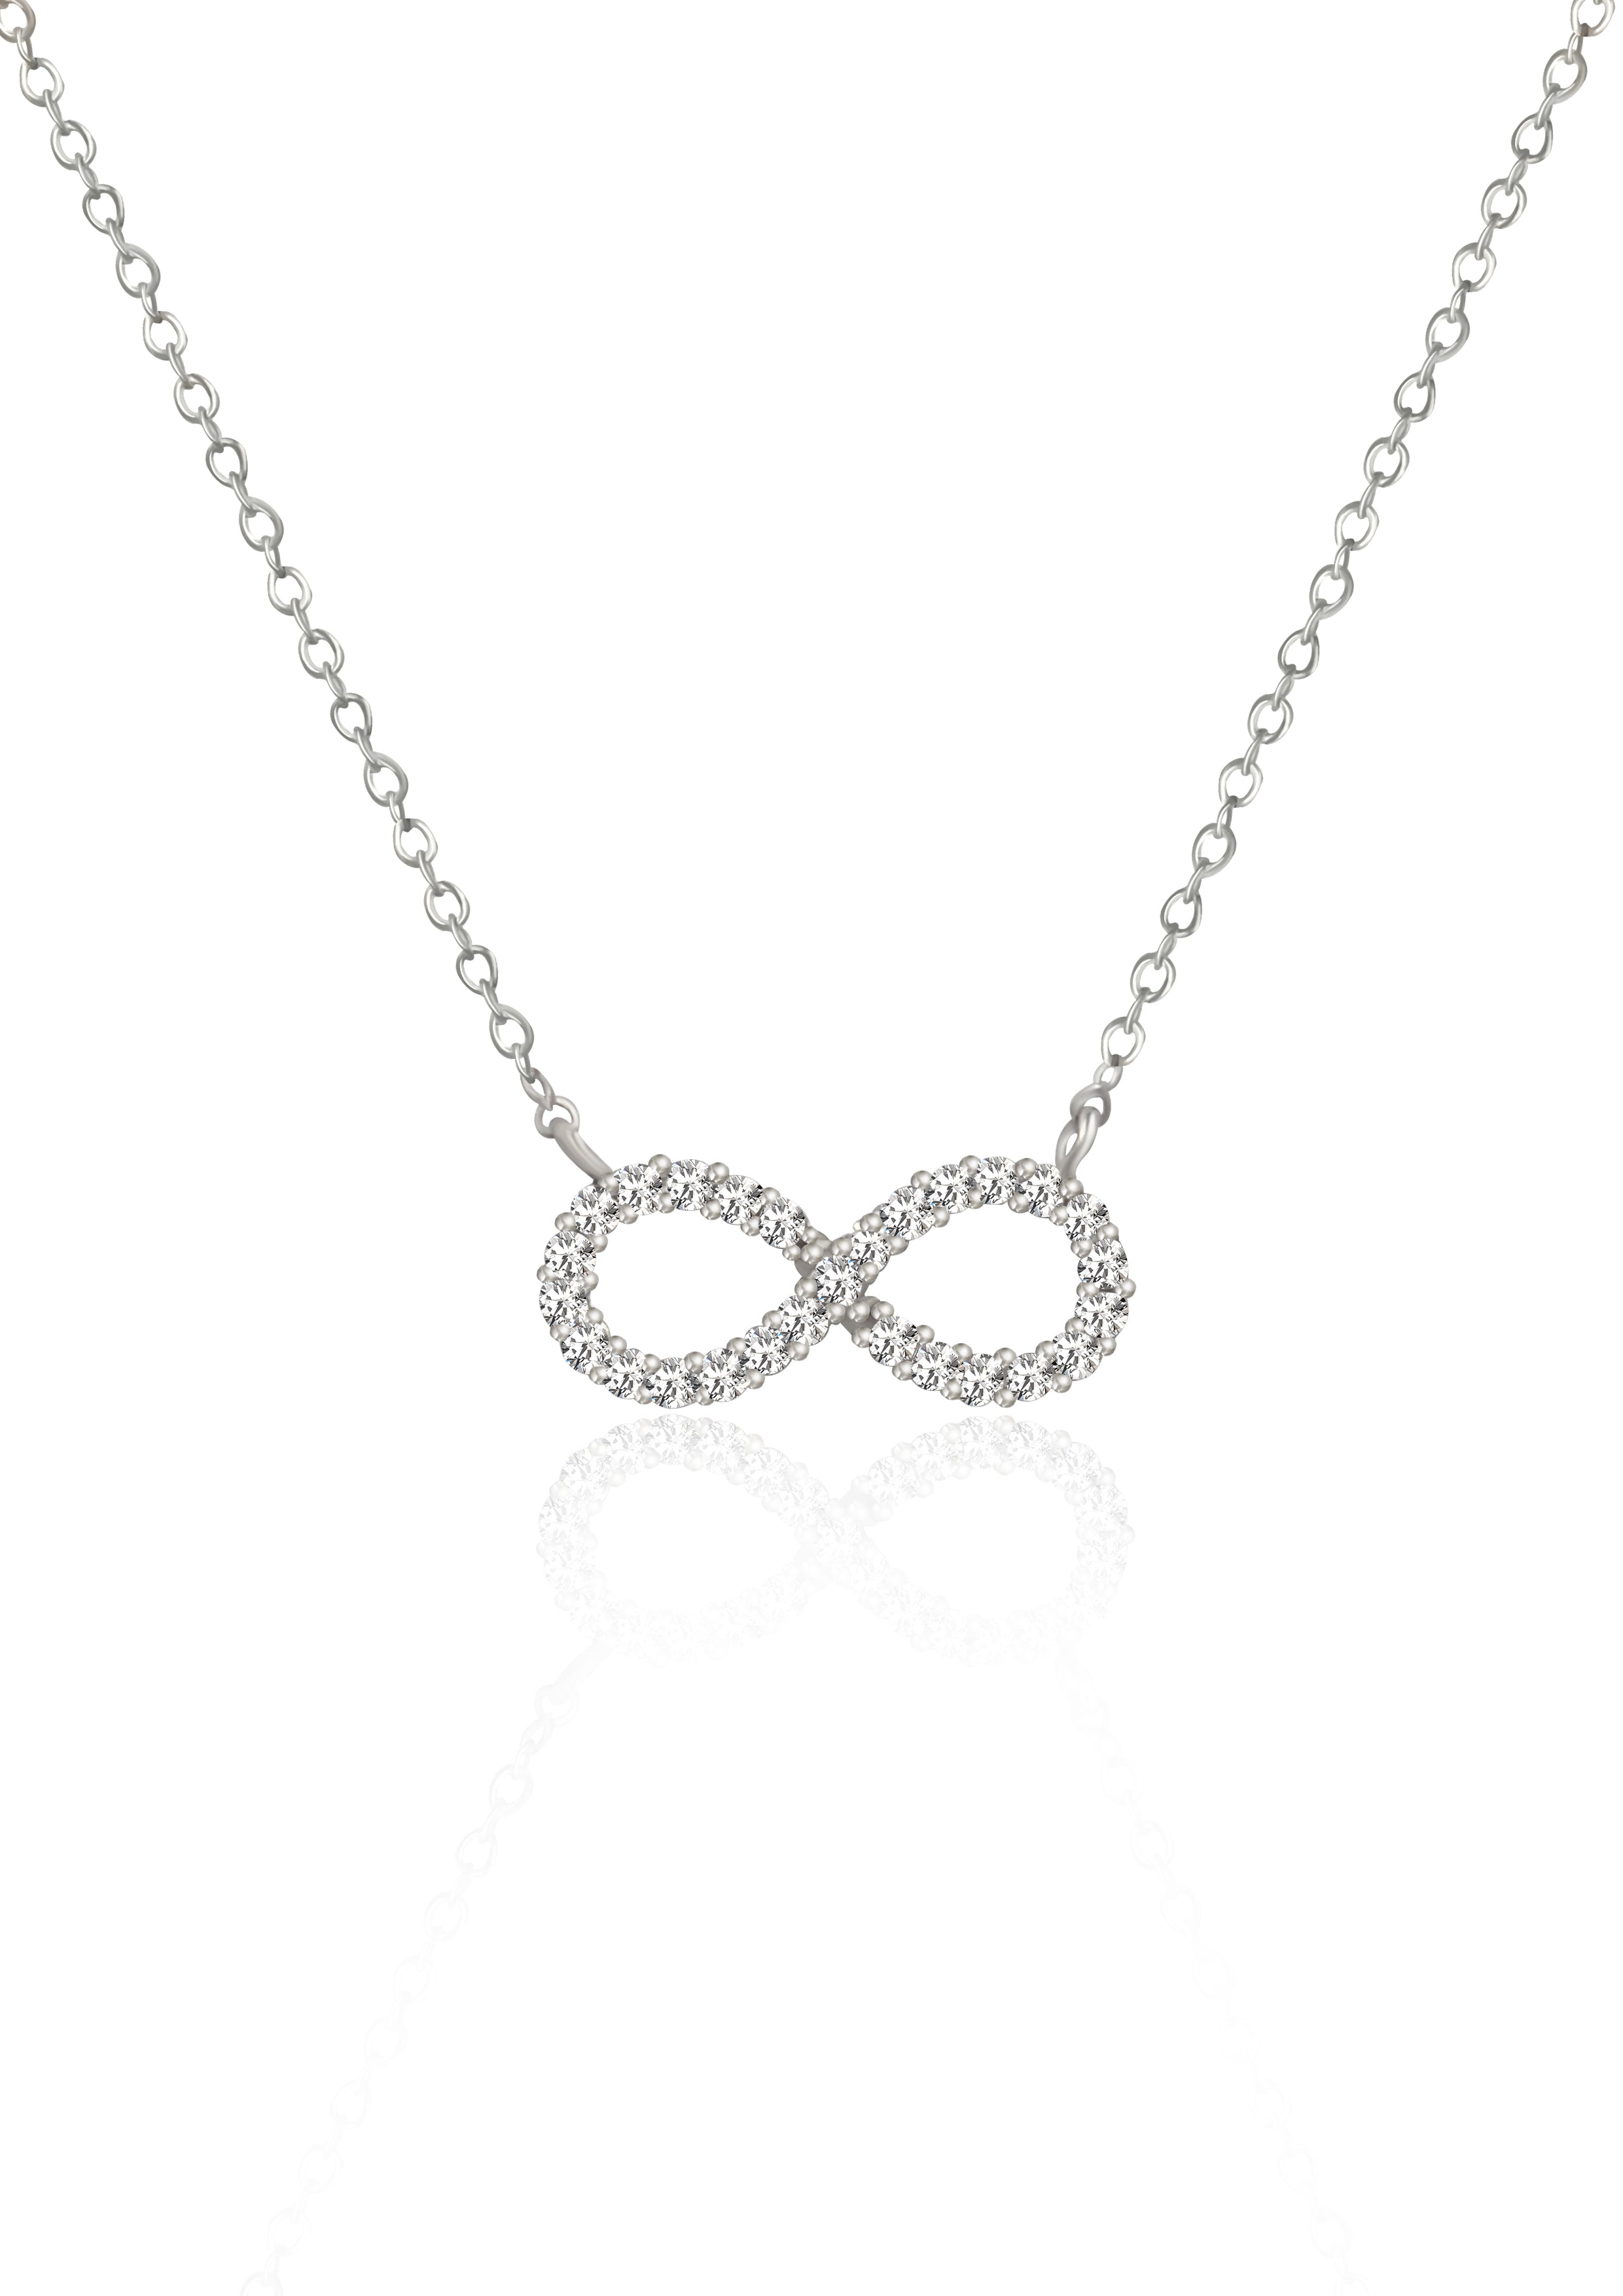 Cute silver infinity pendant for women